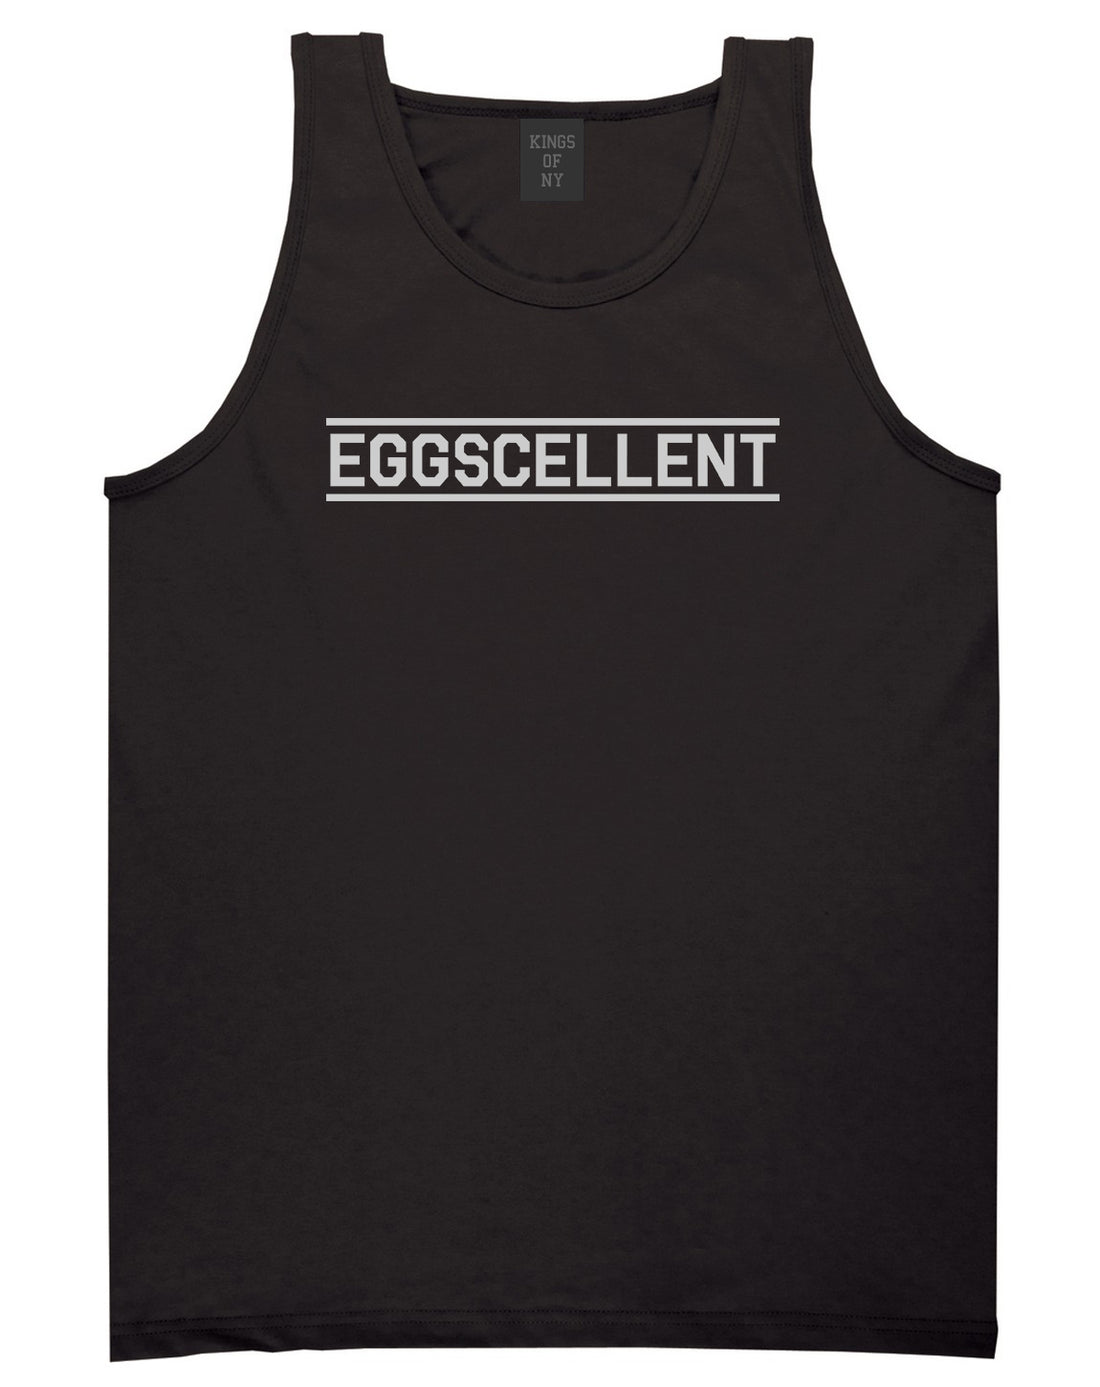 Eggscellent_Funny Mens Black Tank Top Shirt by Kings Of NY